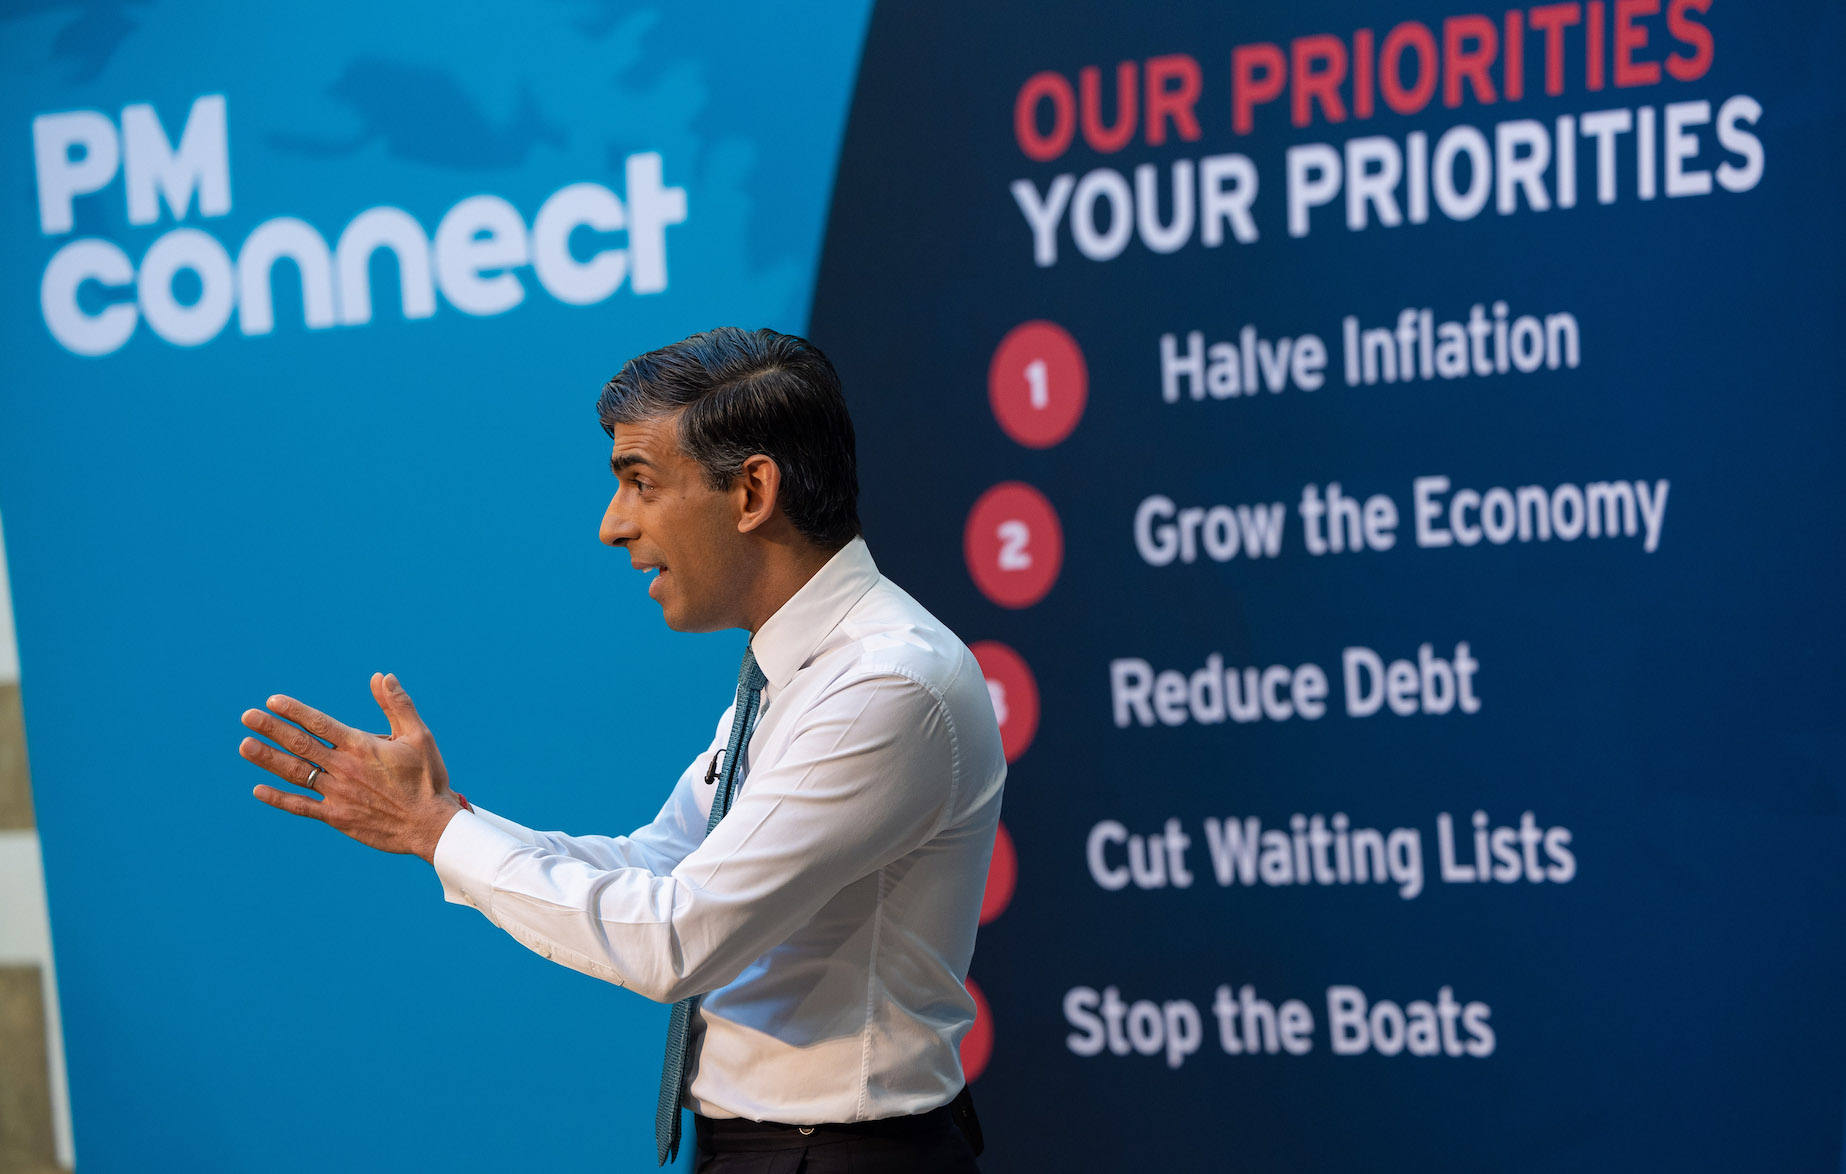 Rishi Sunak discusses his "five pledges" in a PM Connect event.